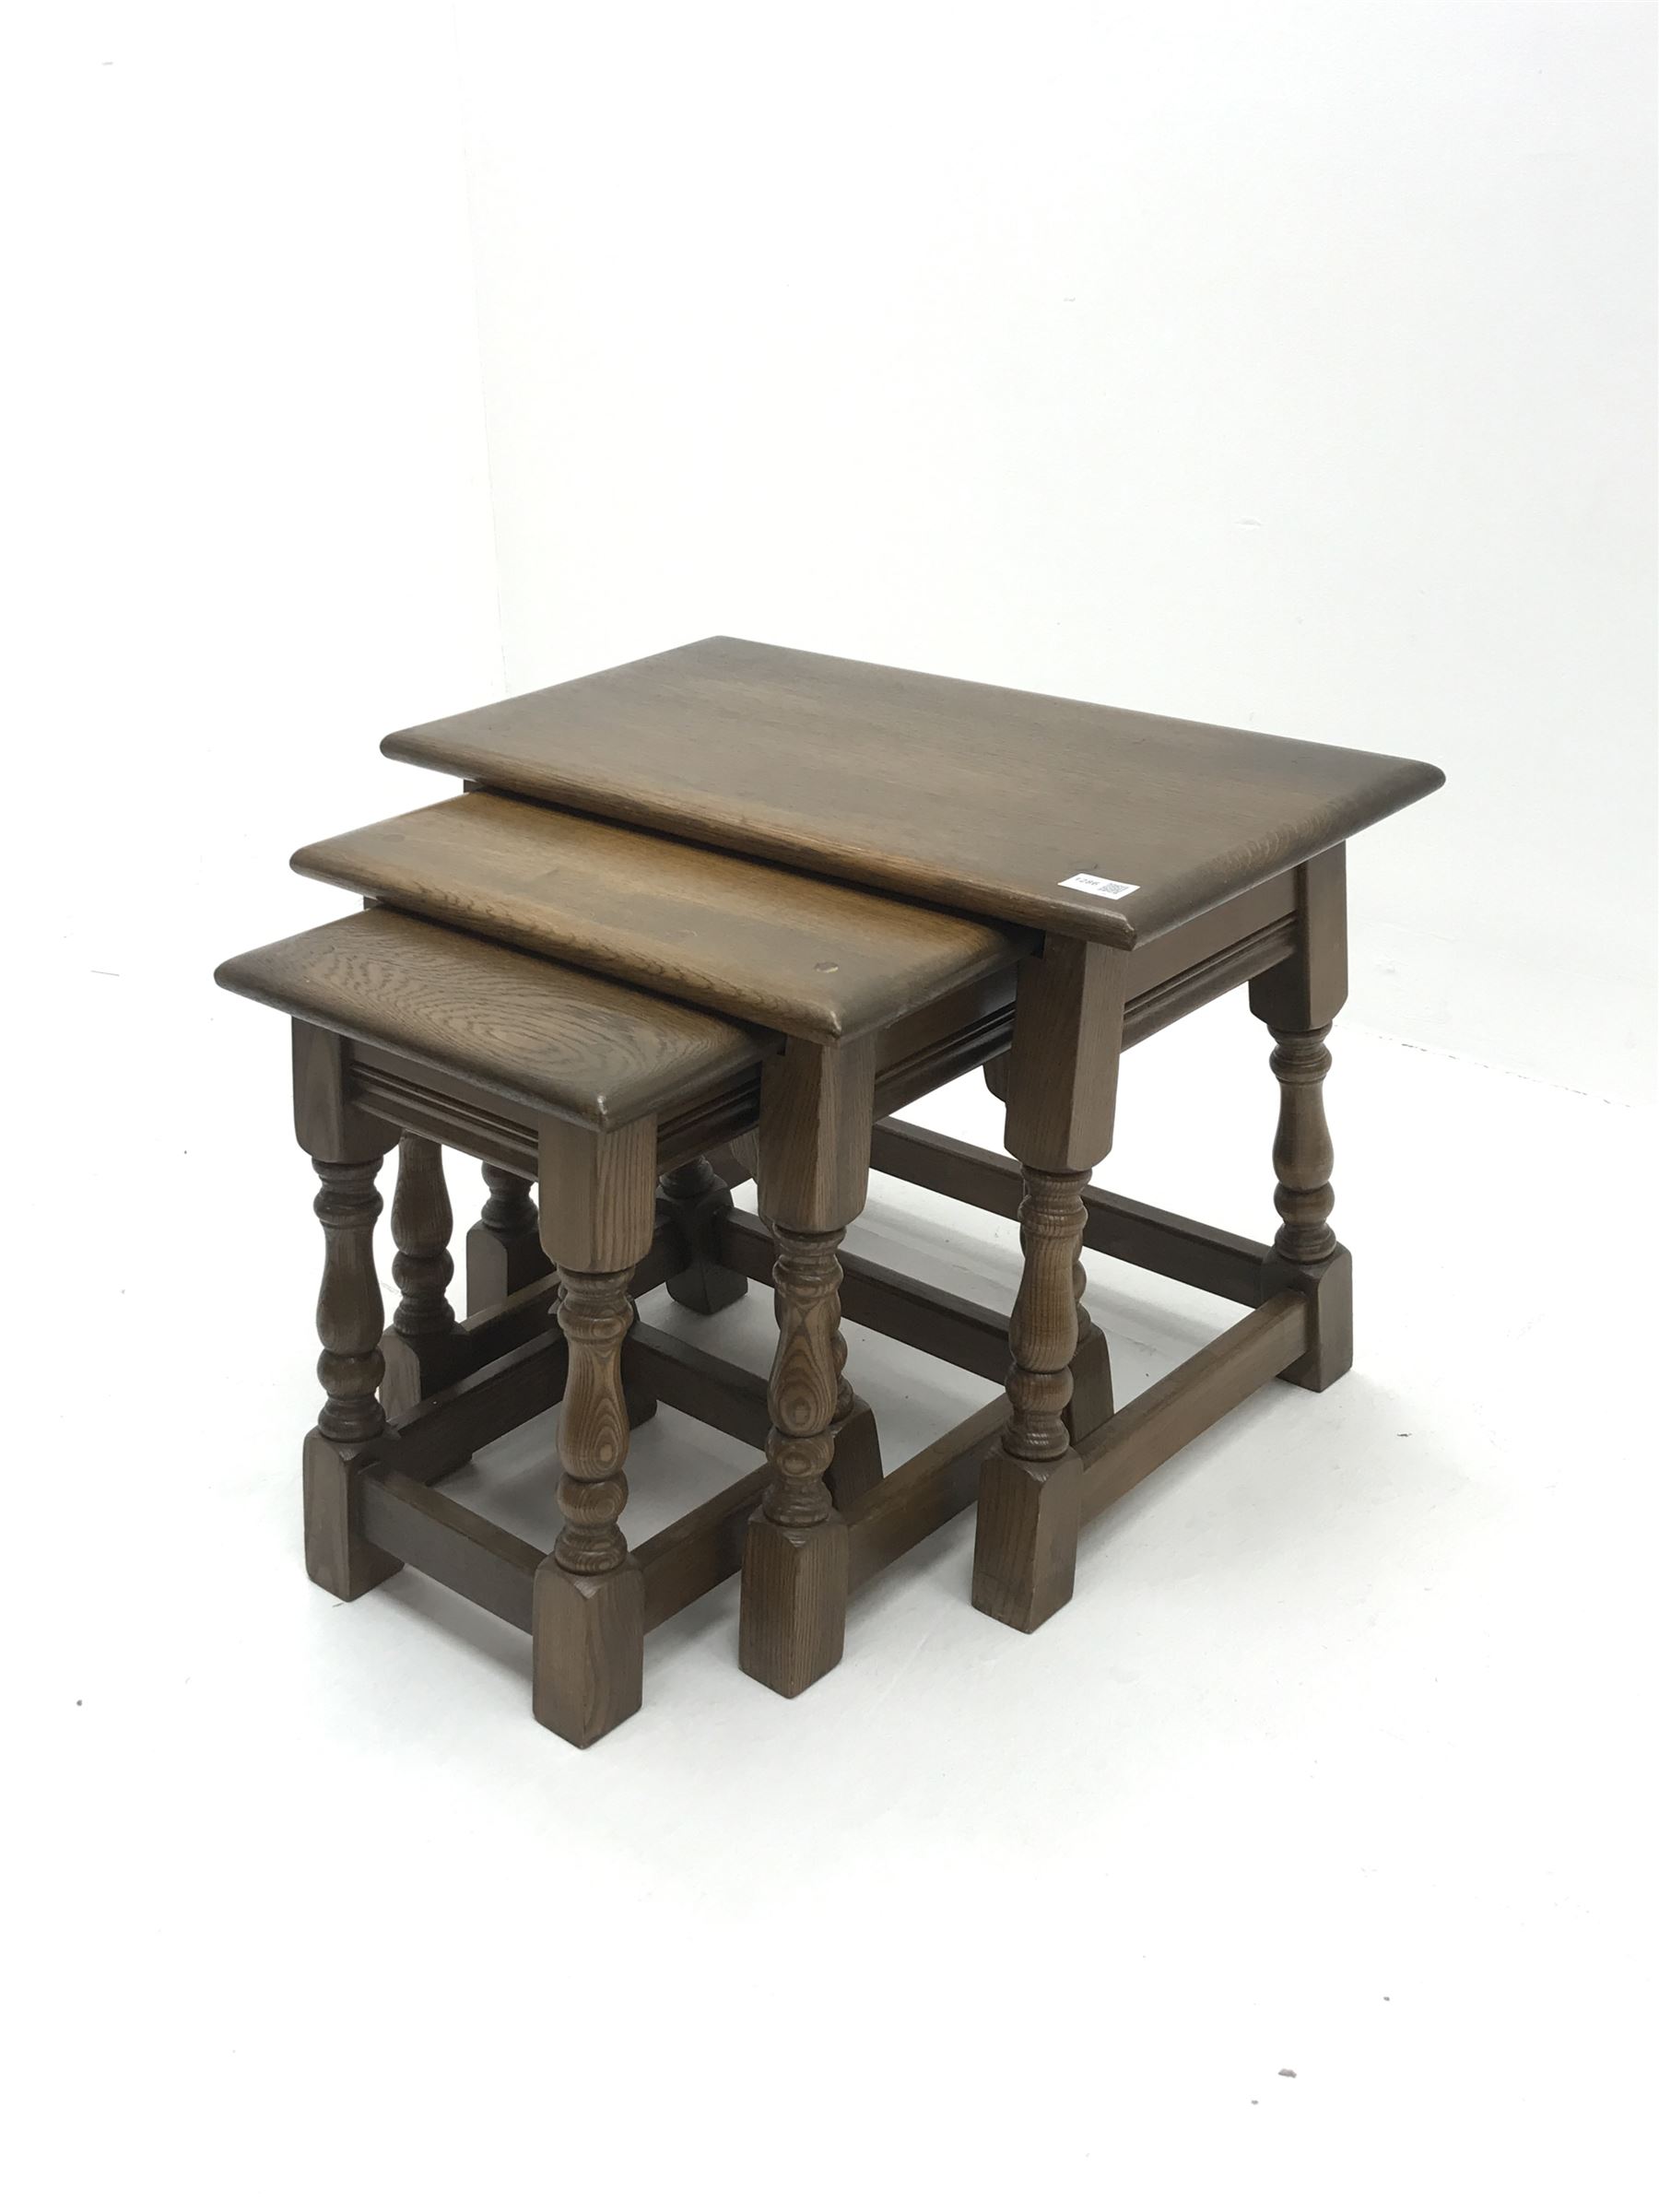 Medium oak nest of three Joint style tables - Image 3 of 3